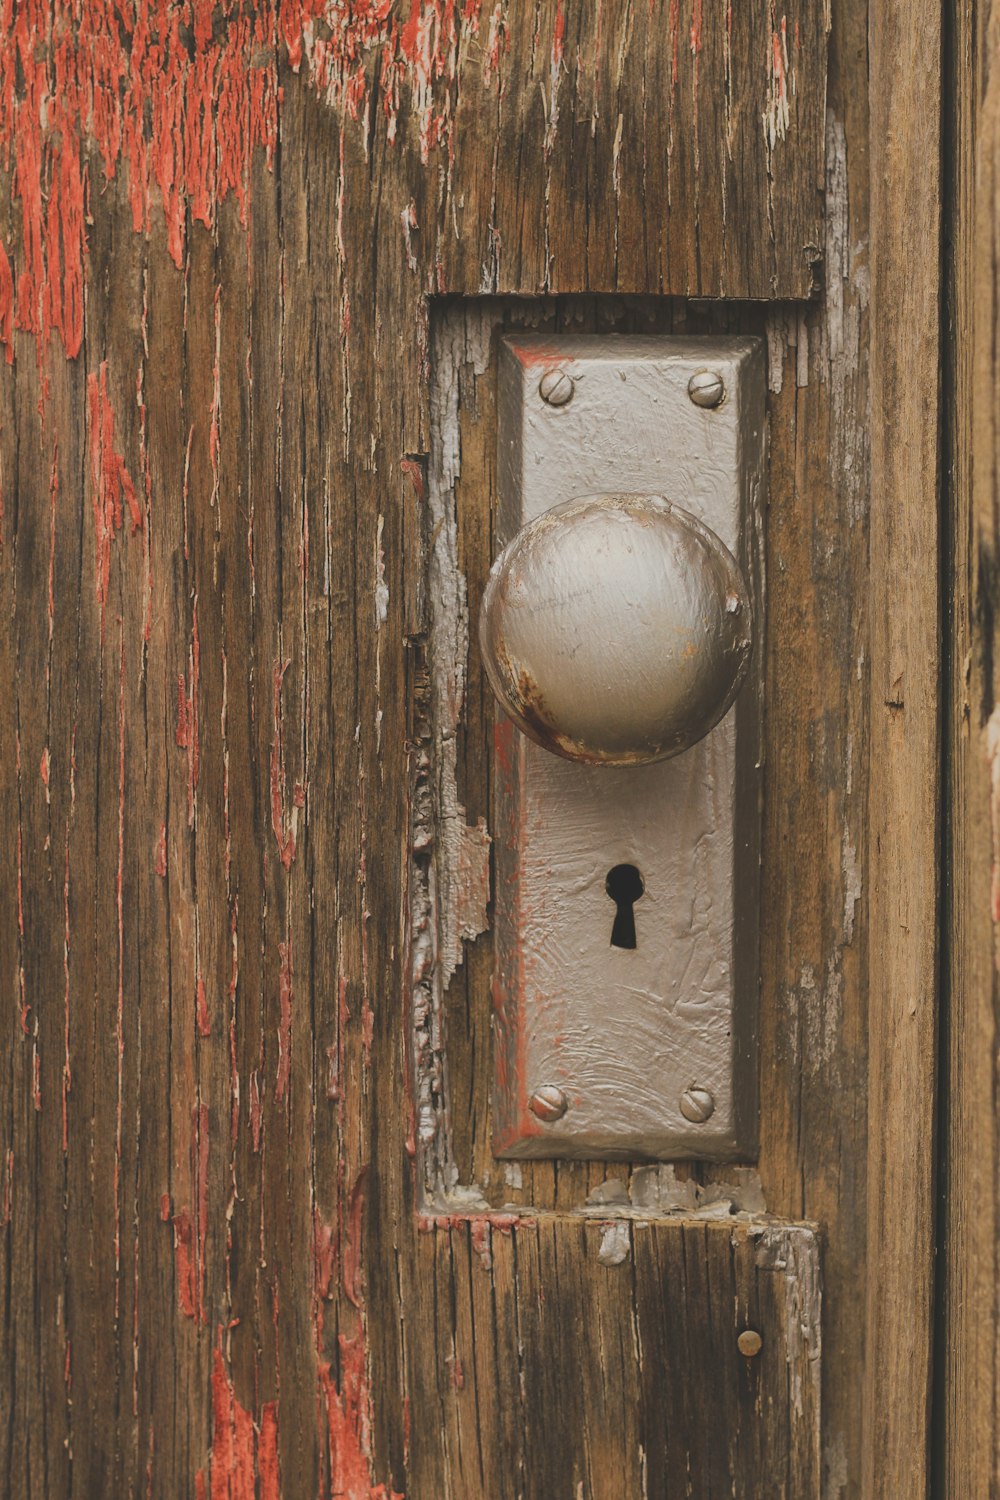 a door handle on a wooden door with rusted paint